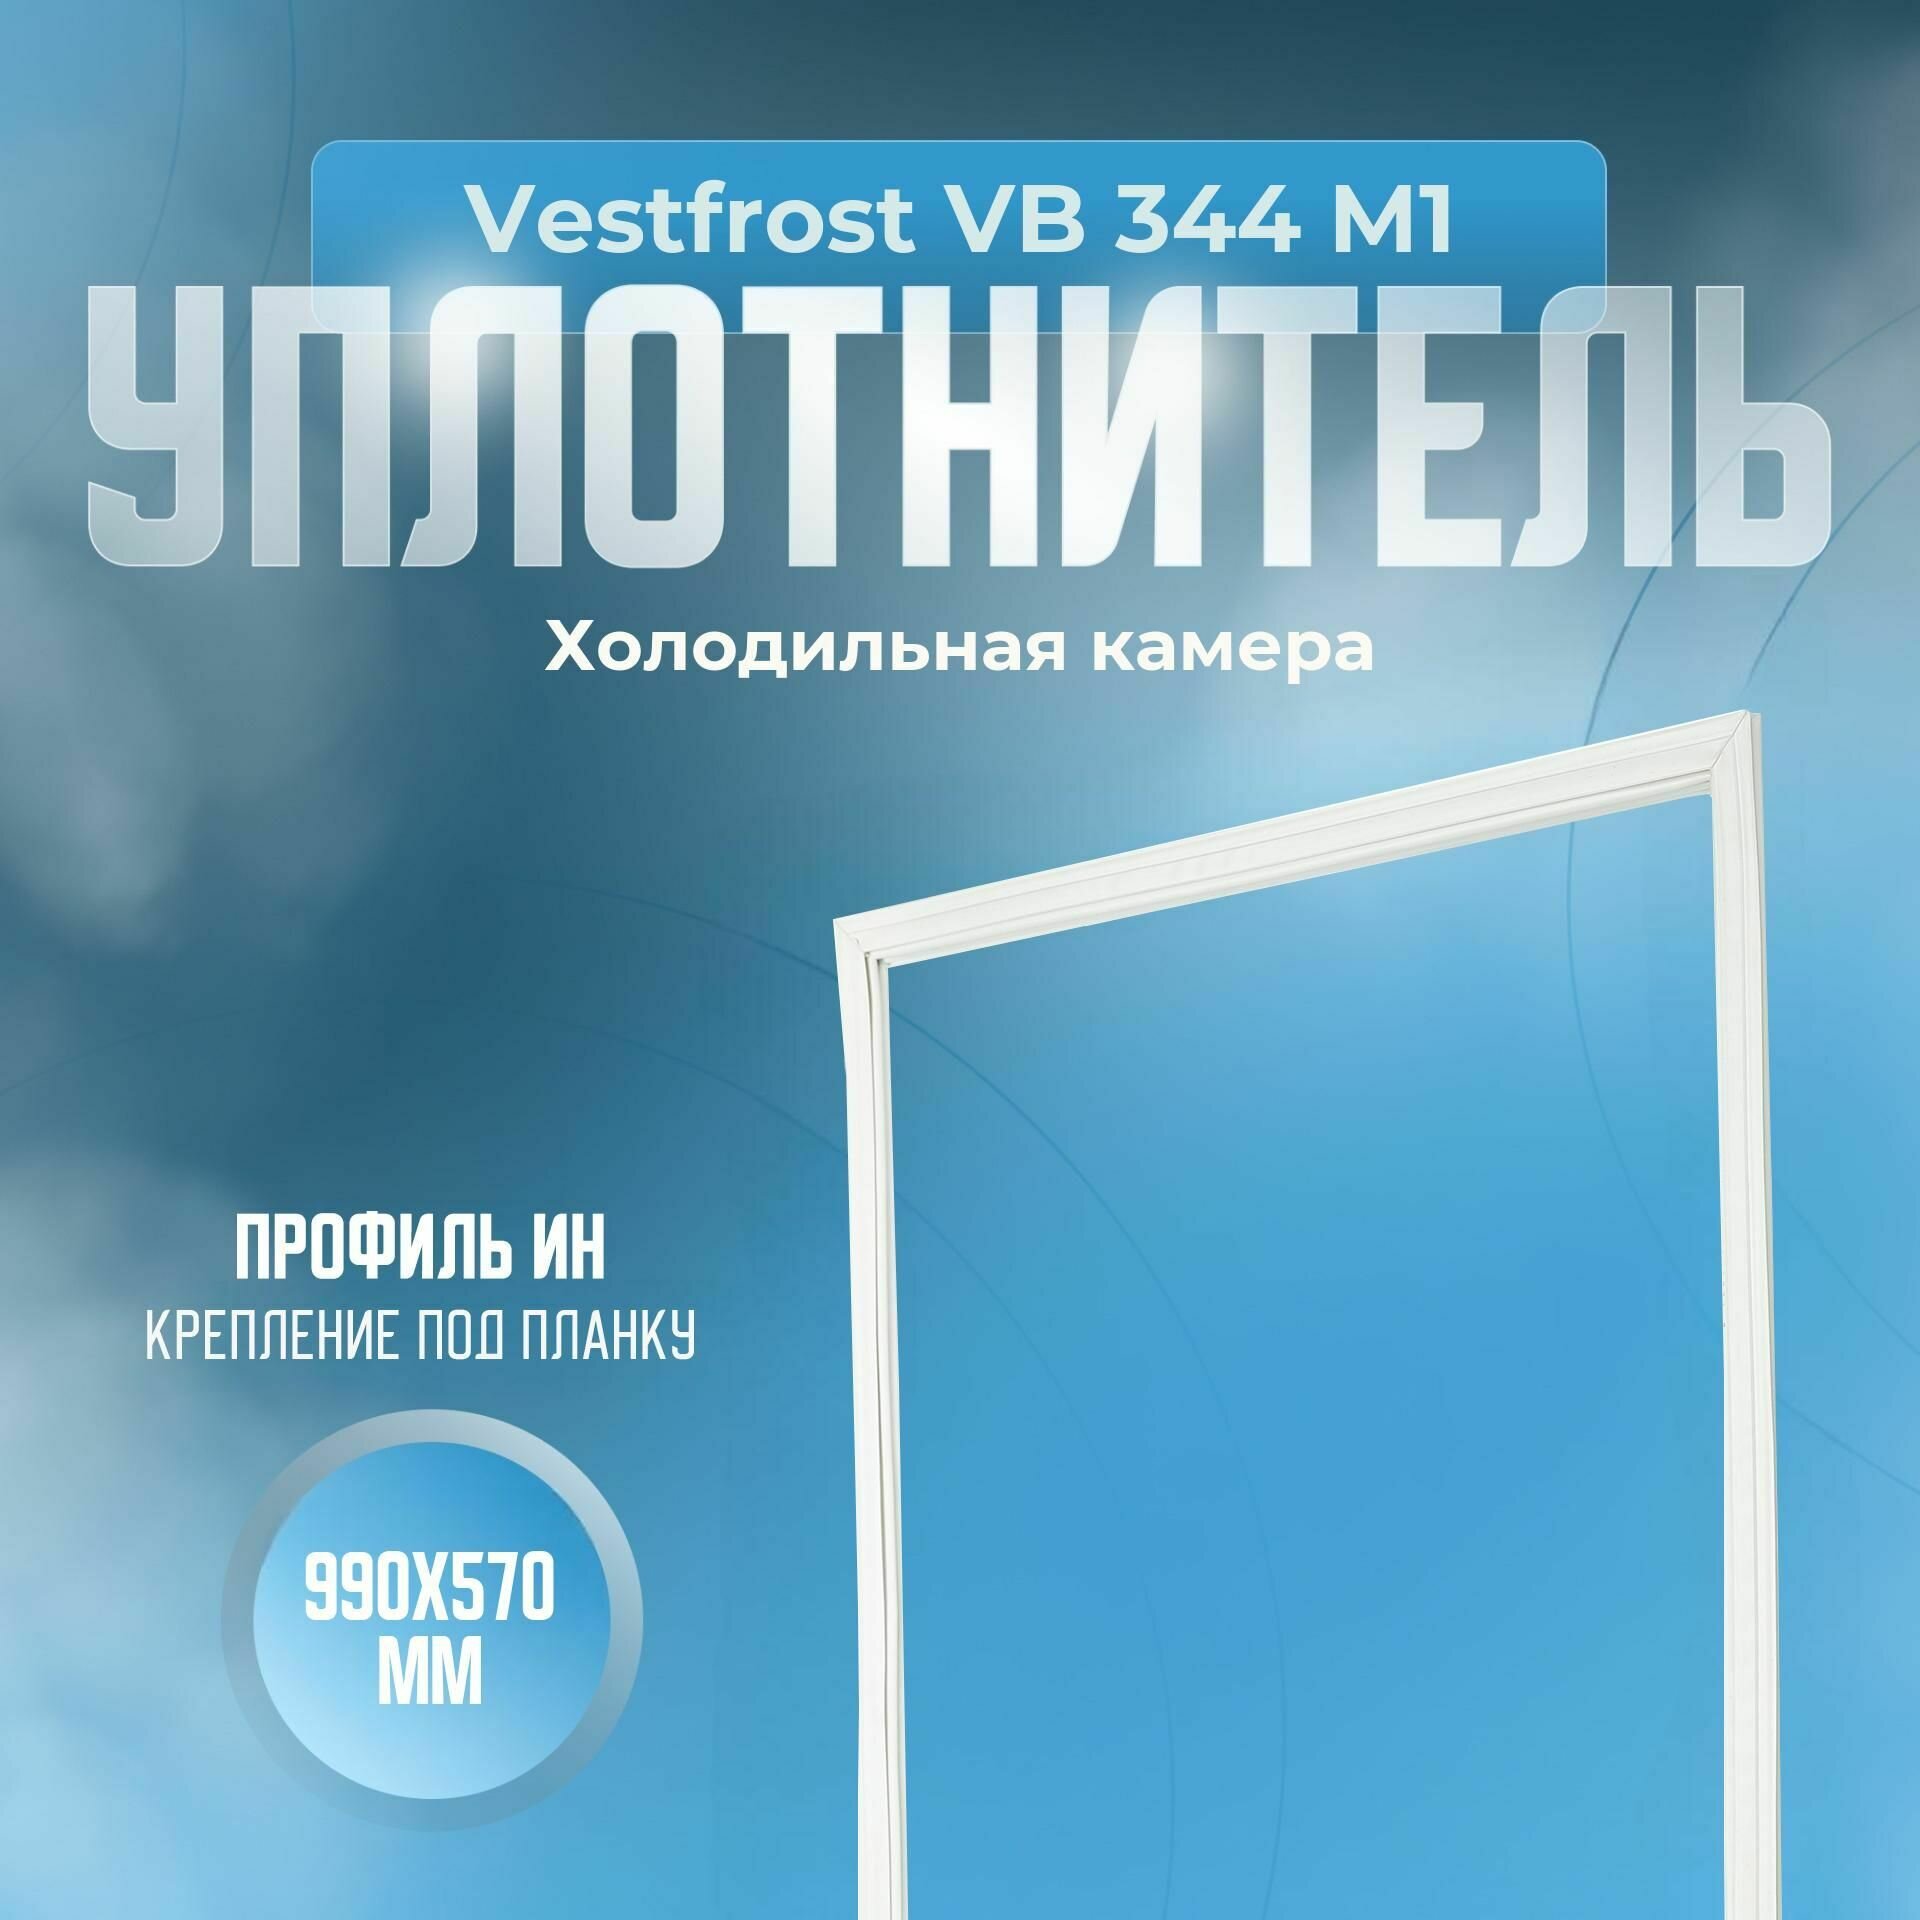 Уплотнитель Vestfrost VB 344 M1. х. к, Размер - 990х570 мм. ИН